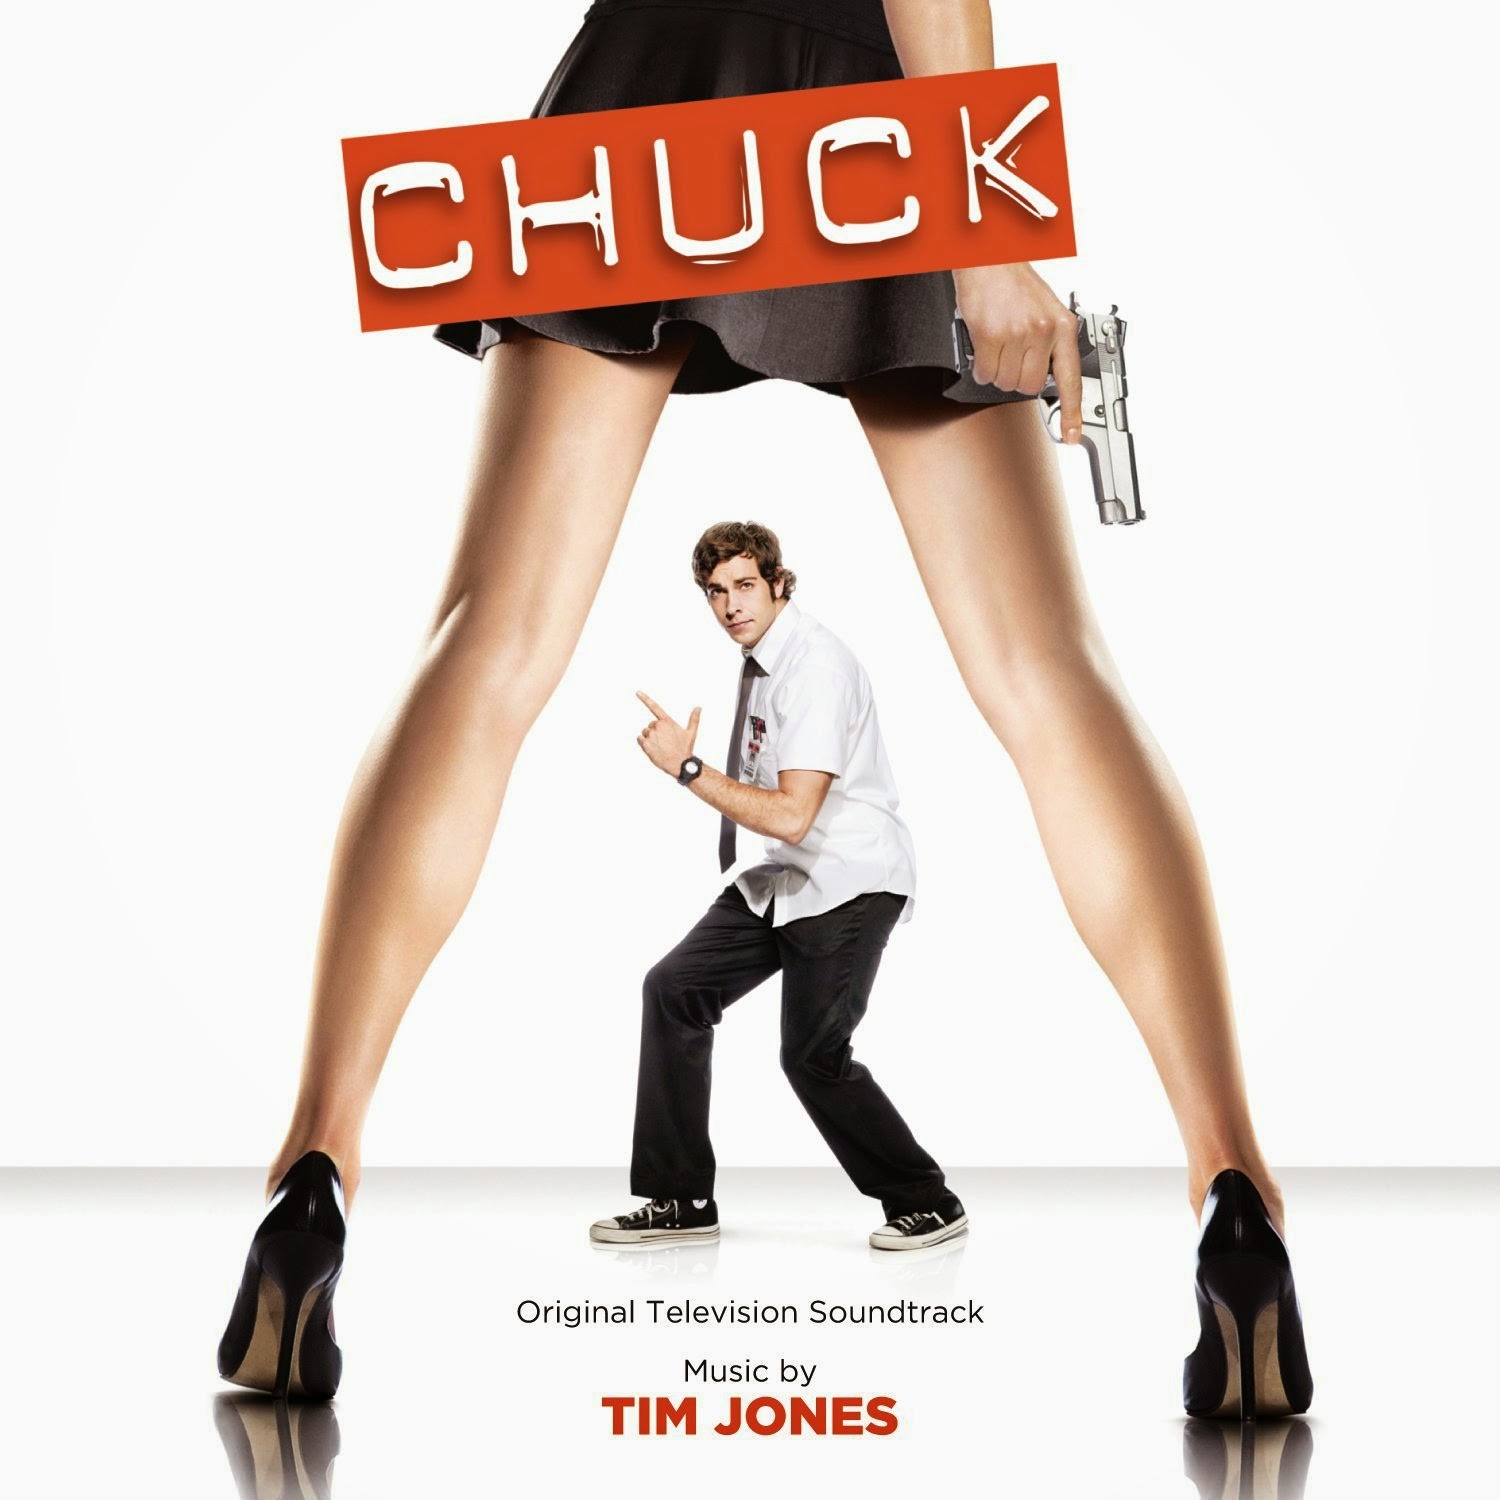 CHUCK Television Soundtrack (Tim Jones) .